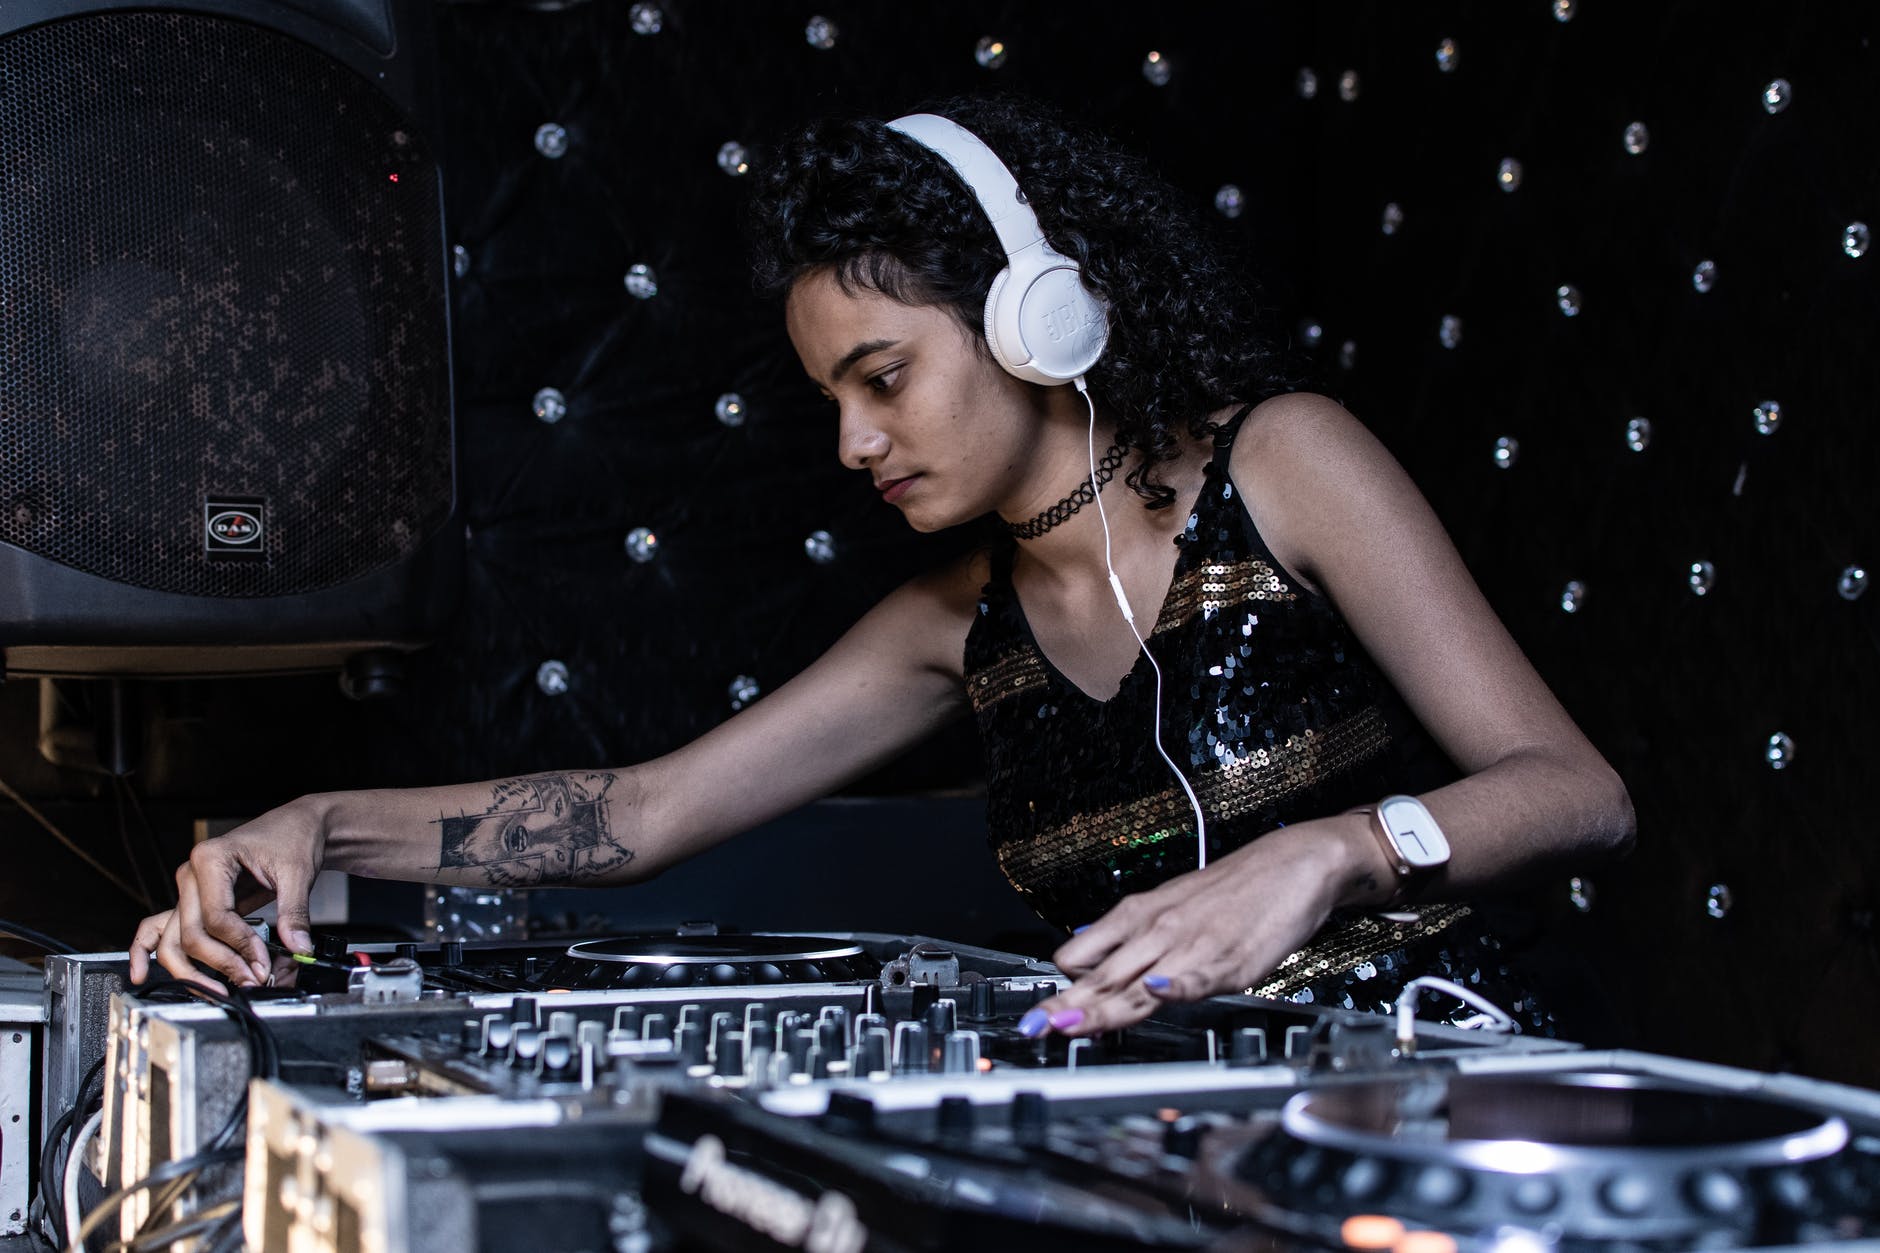 focused ethnic female dj playing music at nightclub